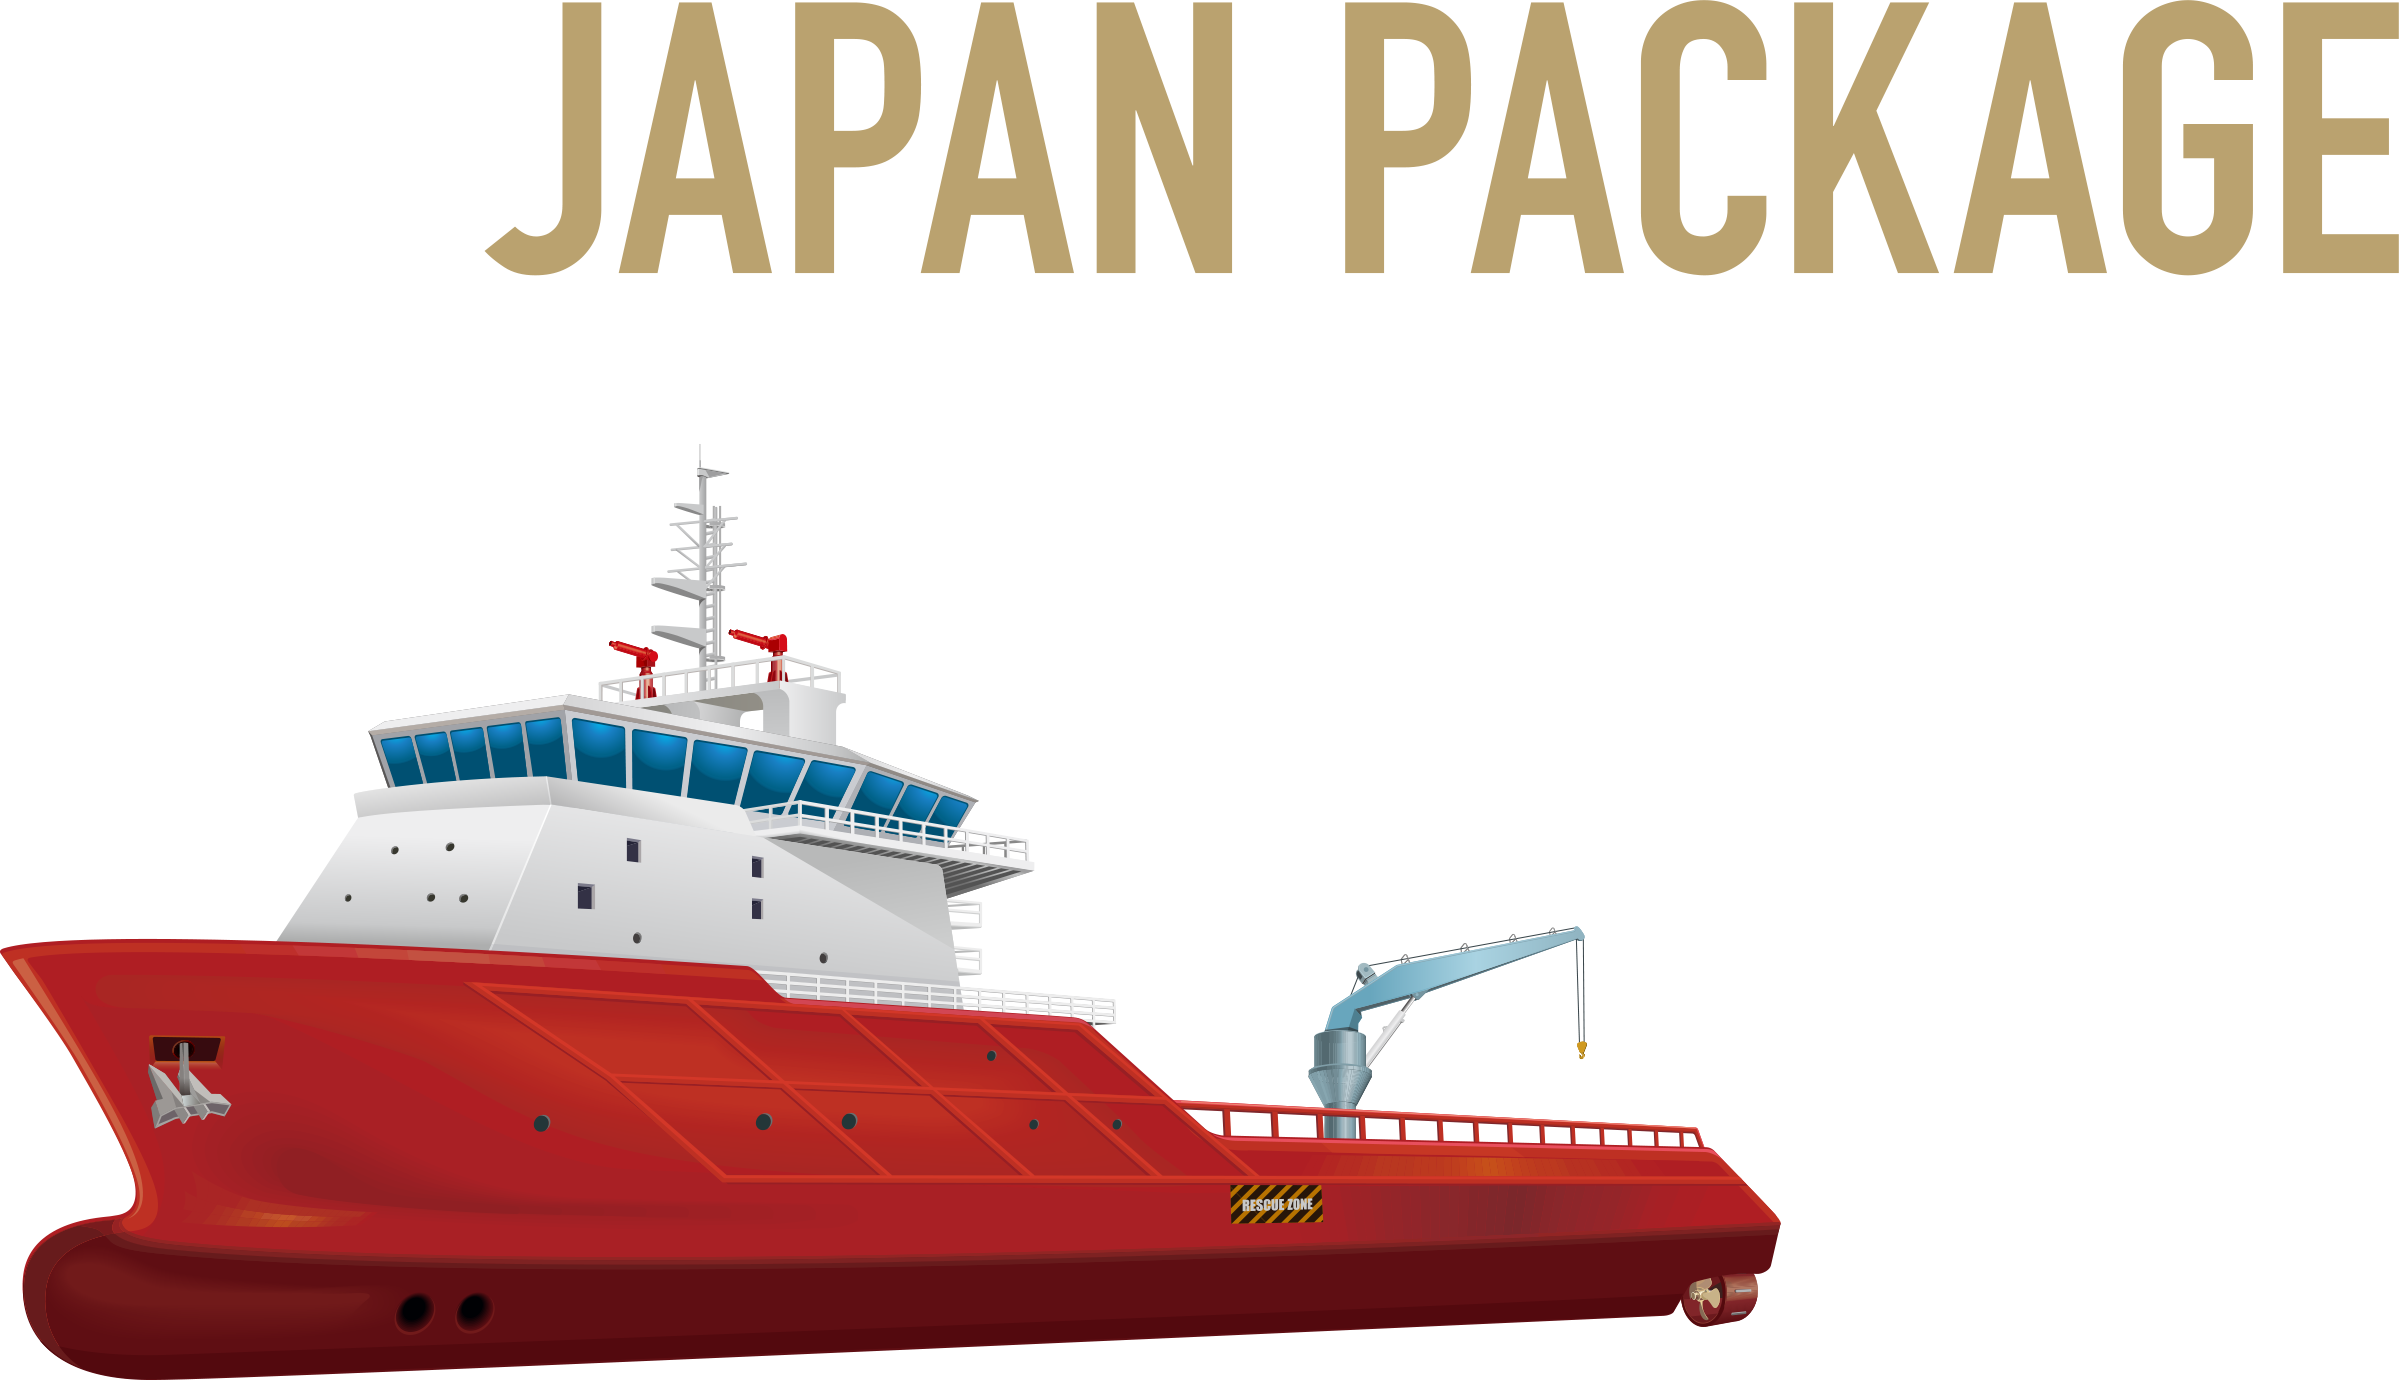 JAPAN PACKAGE FOR MULTI PURPOSE SUPPLY VESSEL